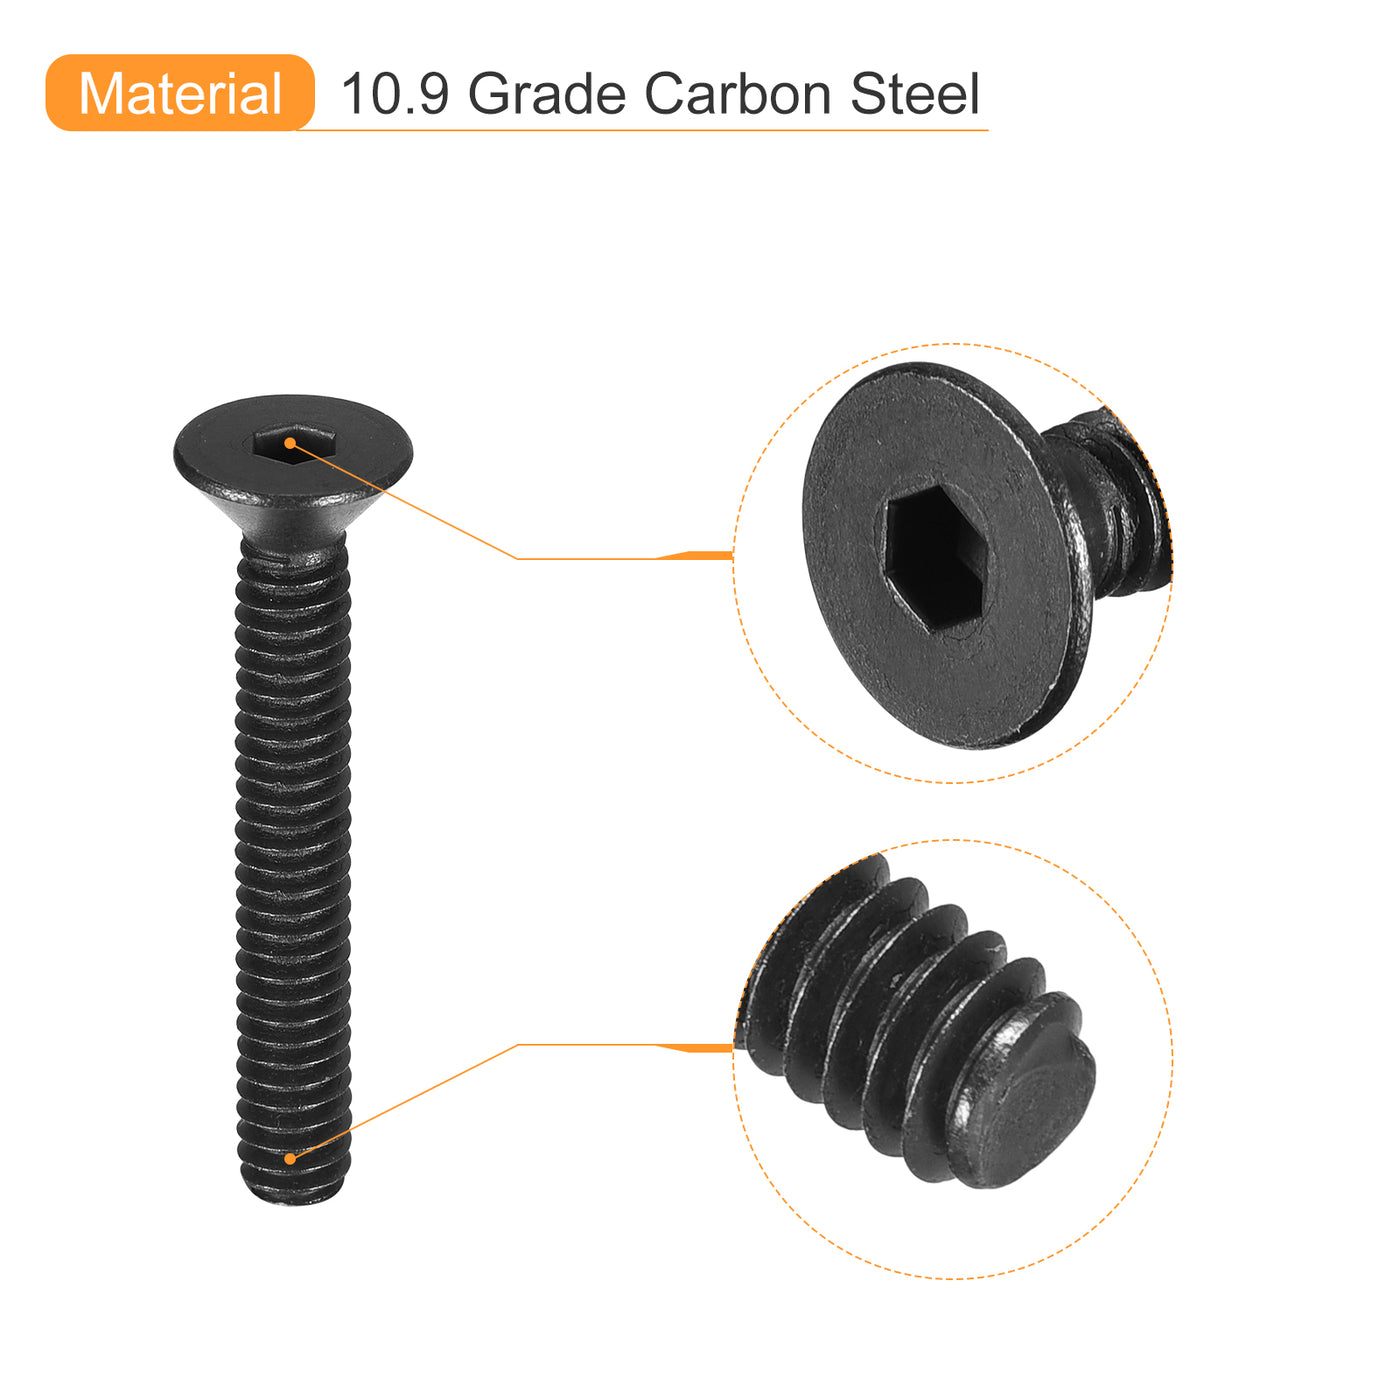 uxcell Uxcell 1/4-20x1-3/4" Flat Head Socket Cap Screws, 10.9 Grade Carbon Steel, 50PCS